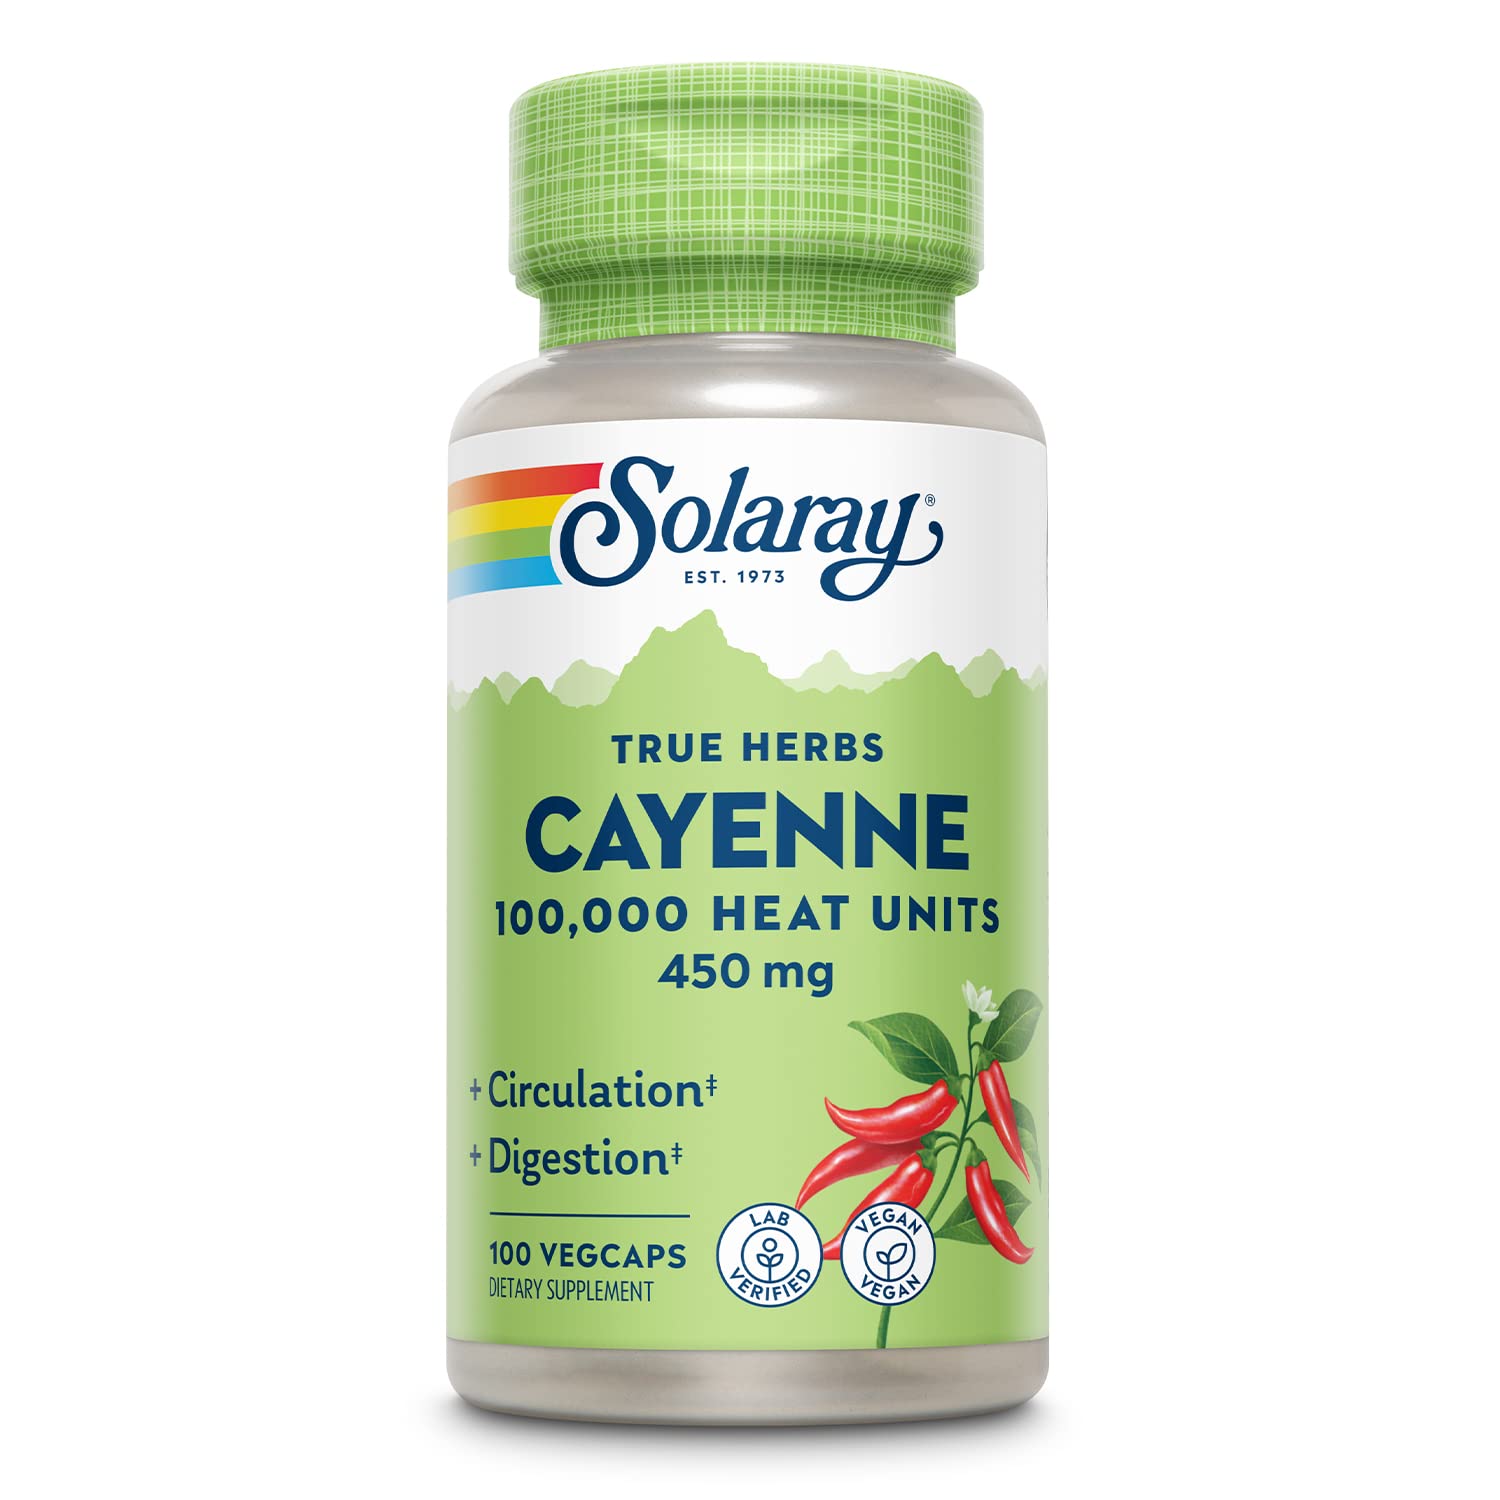 Solaray Cayenne Pepper 450 mg - 100,000 Heat Unit - 100 VegCaps